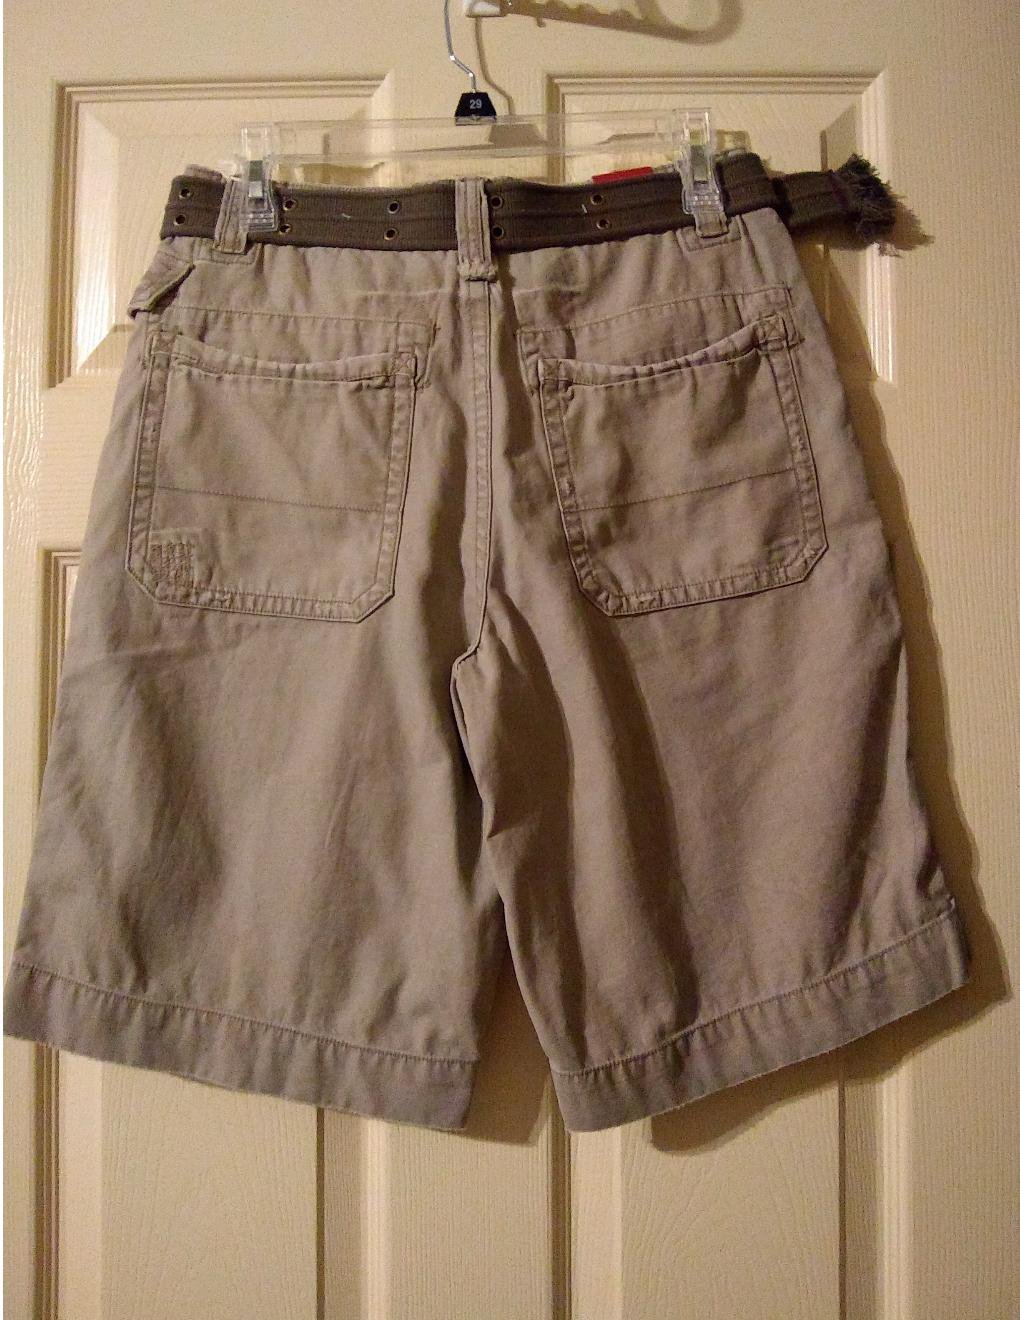 Mossimo Mens Vintage Khaki Shorts Vintage Inspired + Bonus Belt Sz 28 NEW